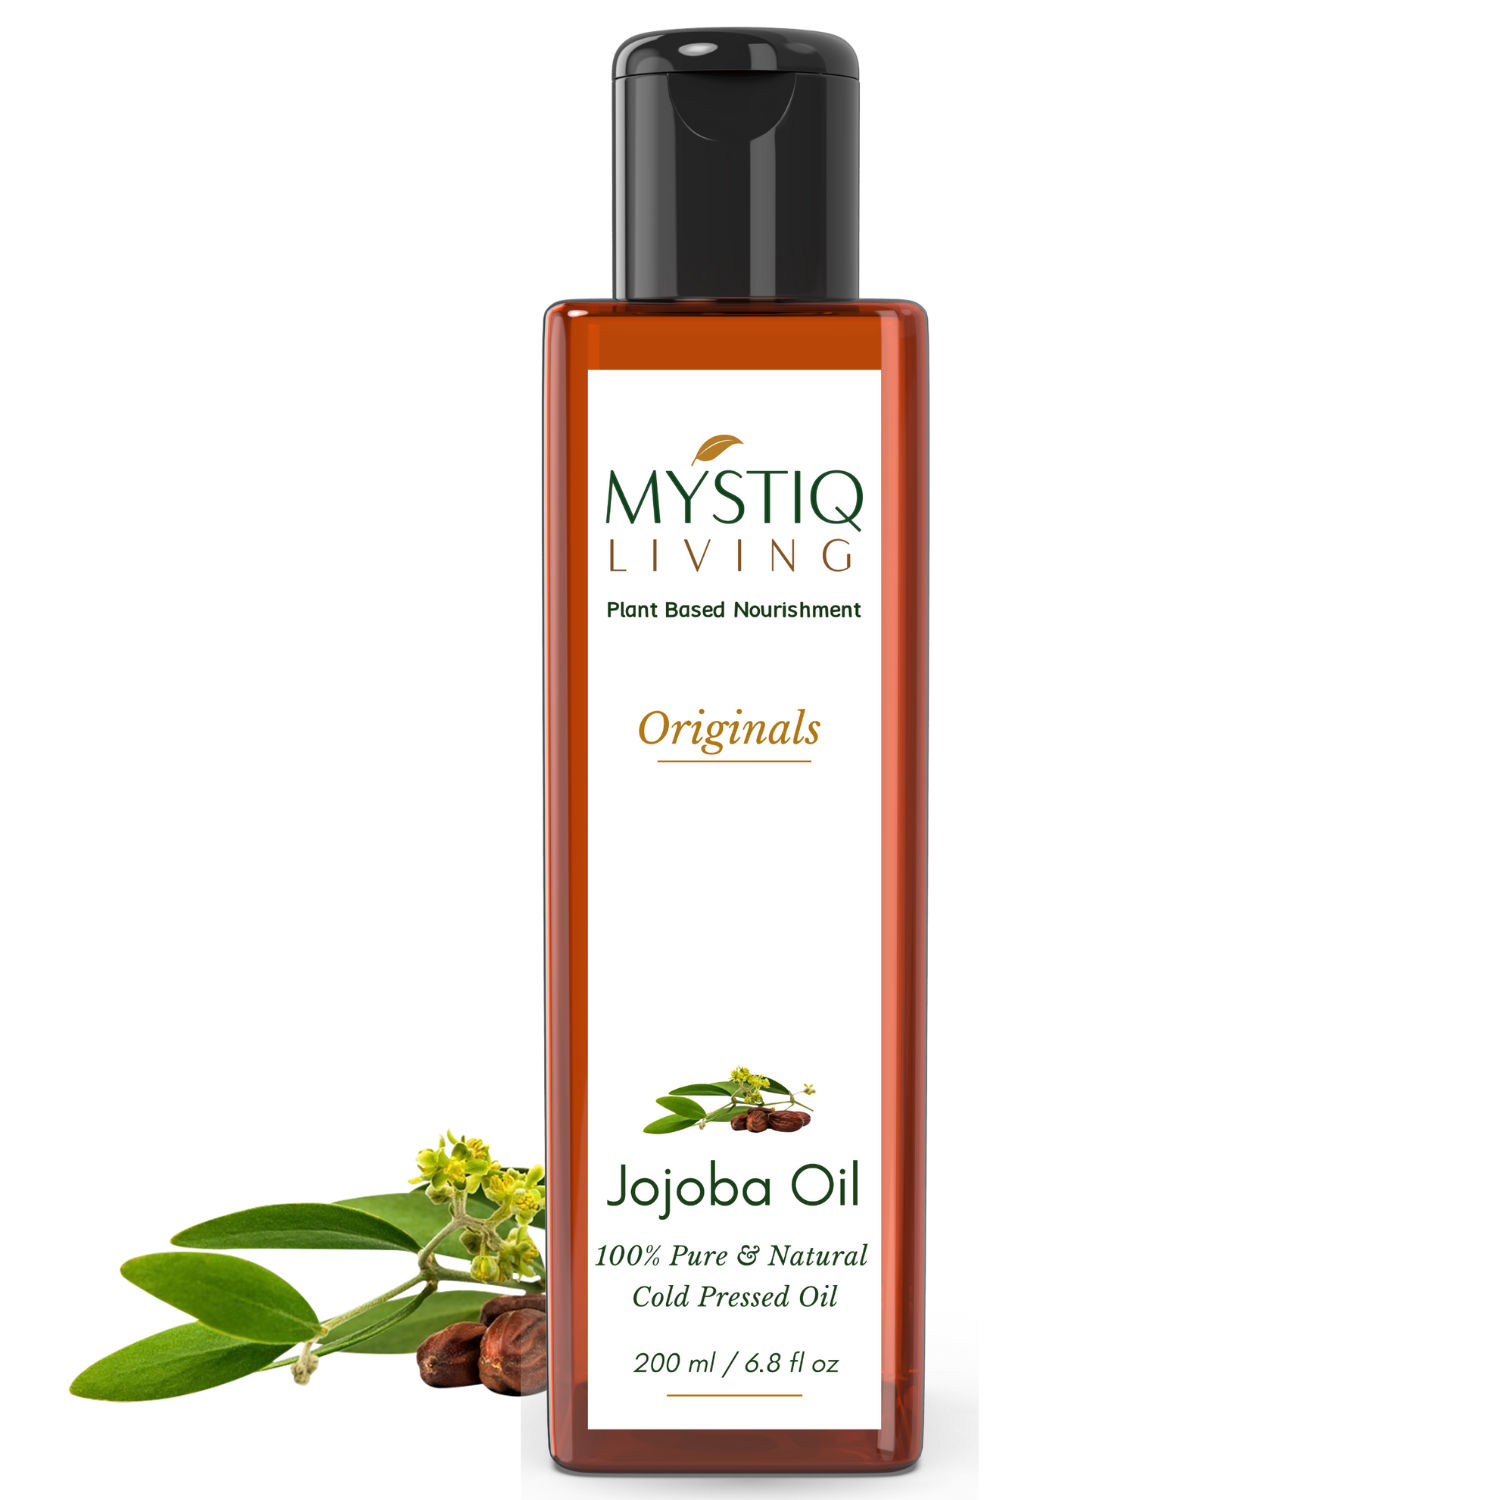 Buy Mystiq Living Originals - Pure Golden Virgin Jojoba Oil | Hair, Skin & Face Care | Natural Makeup Remover | Cold Pressed | 100% Pure and Natural - 200 ML - Purplle